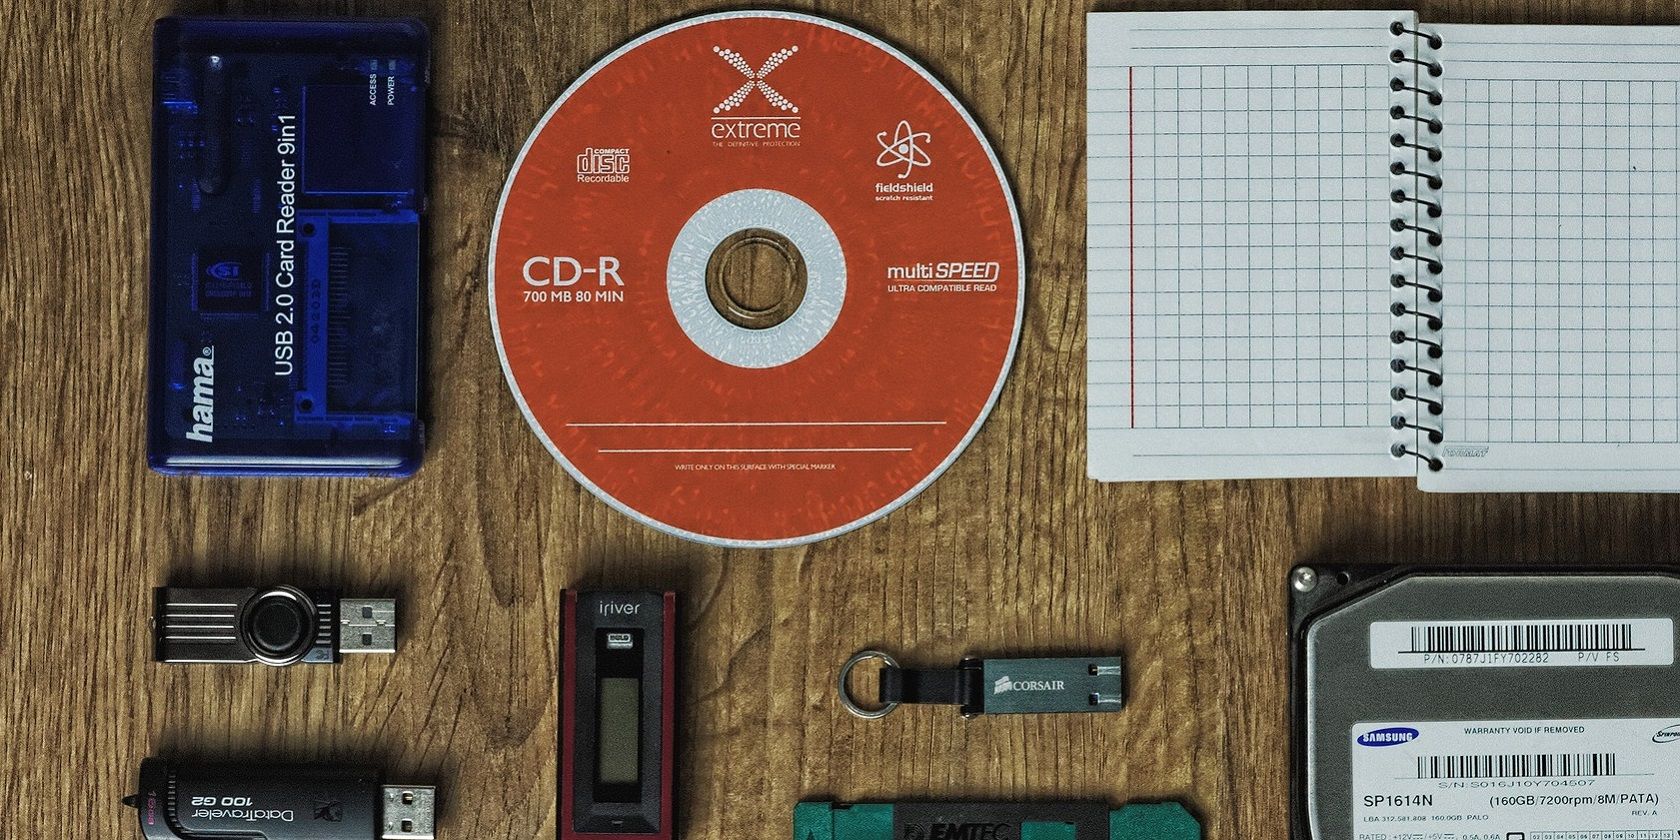 Discs and USB sticks